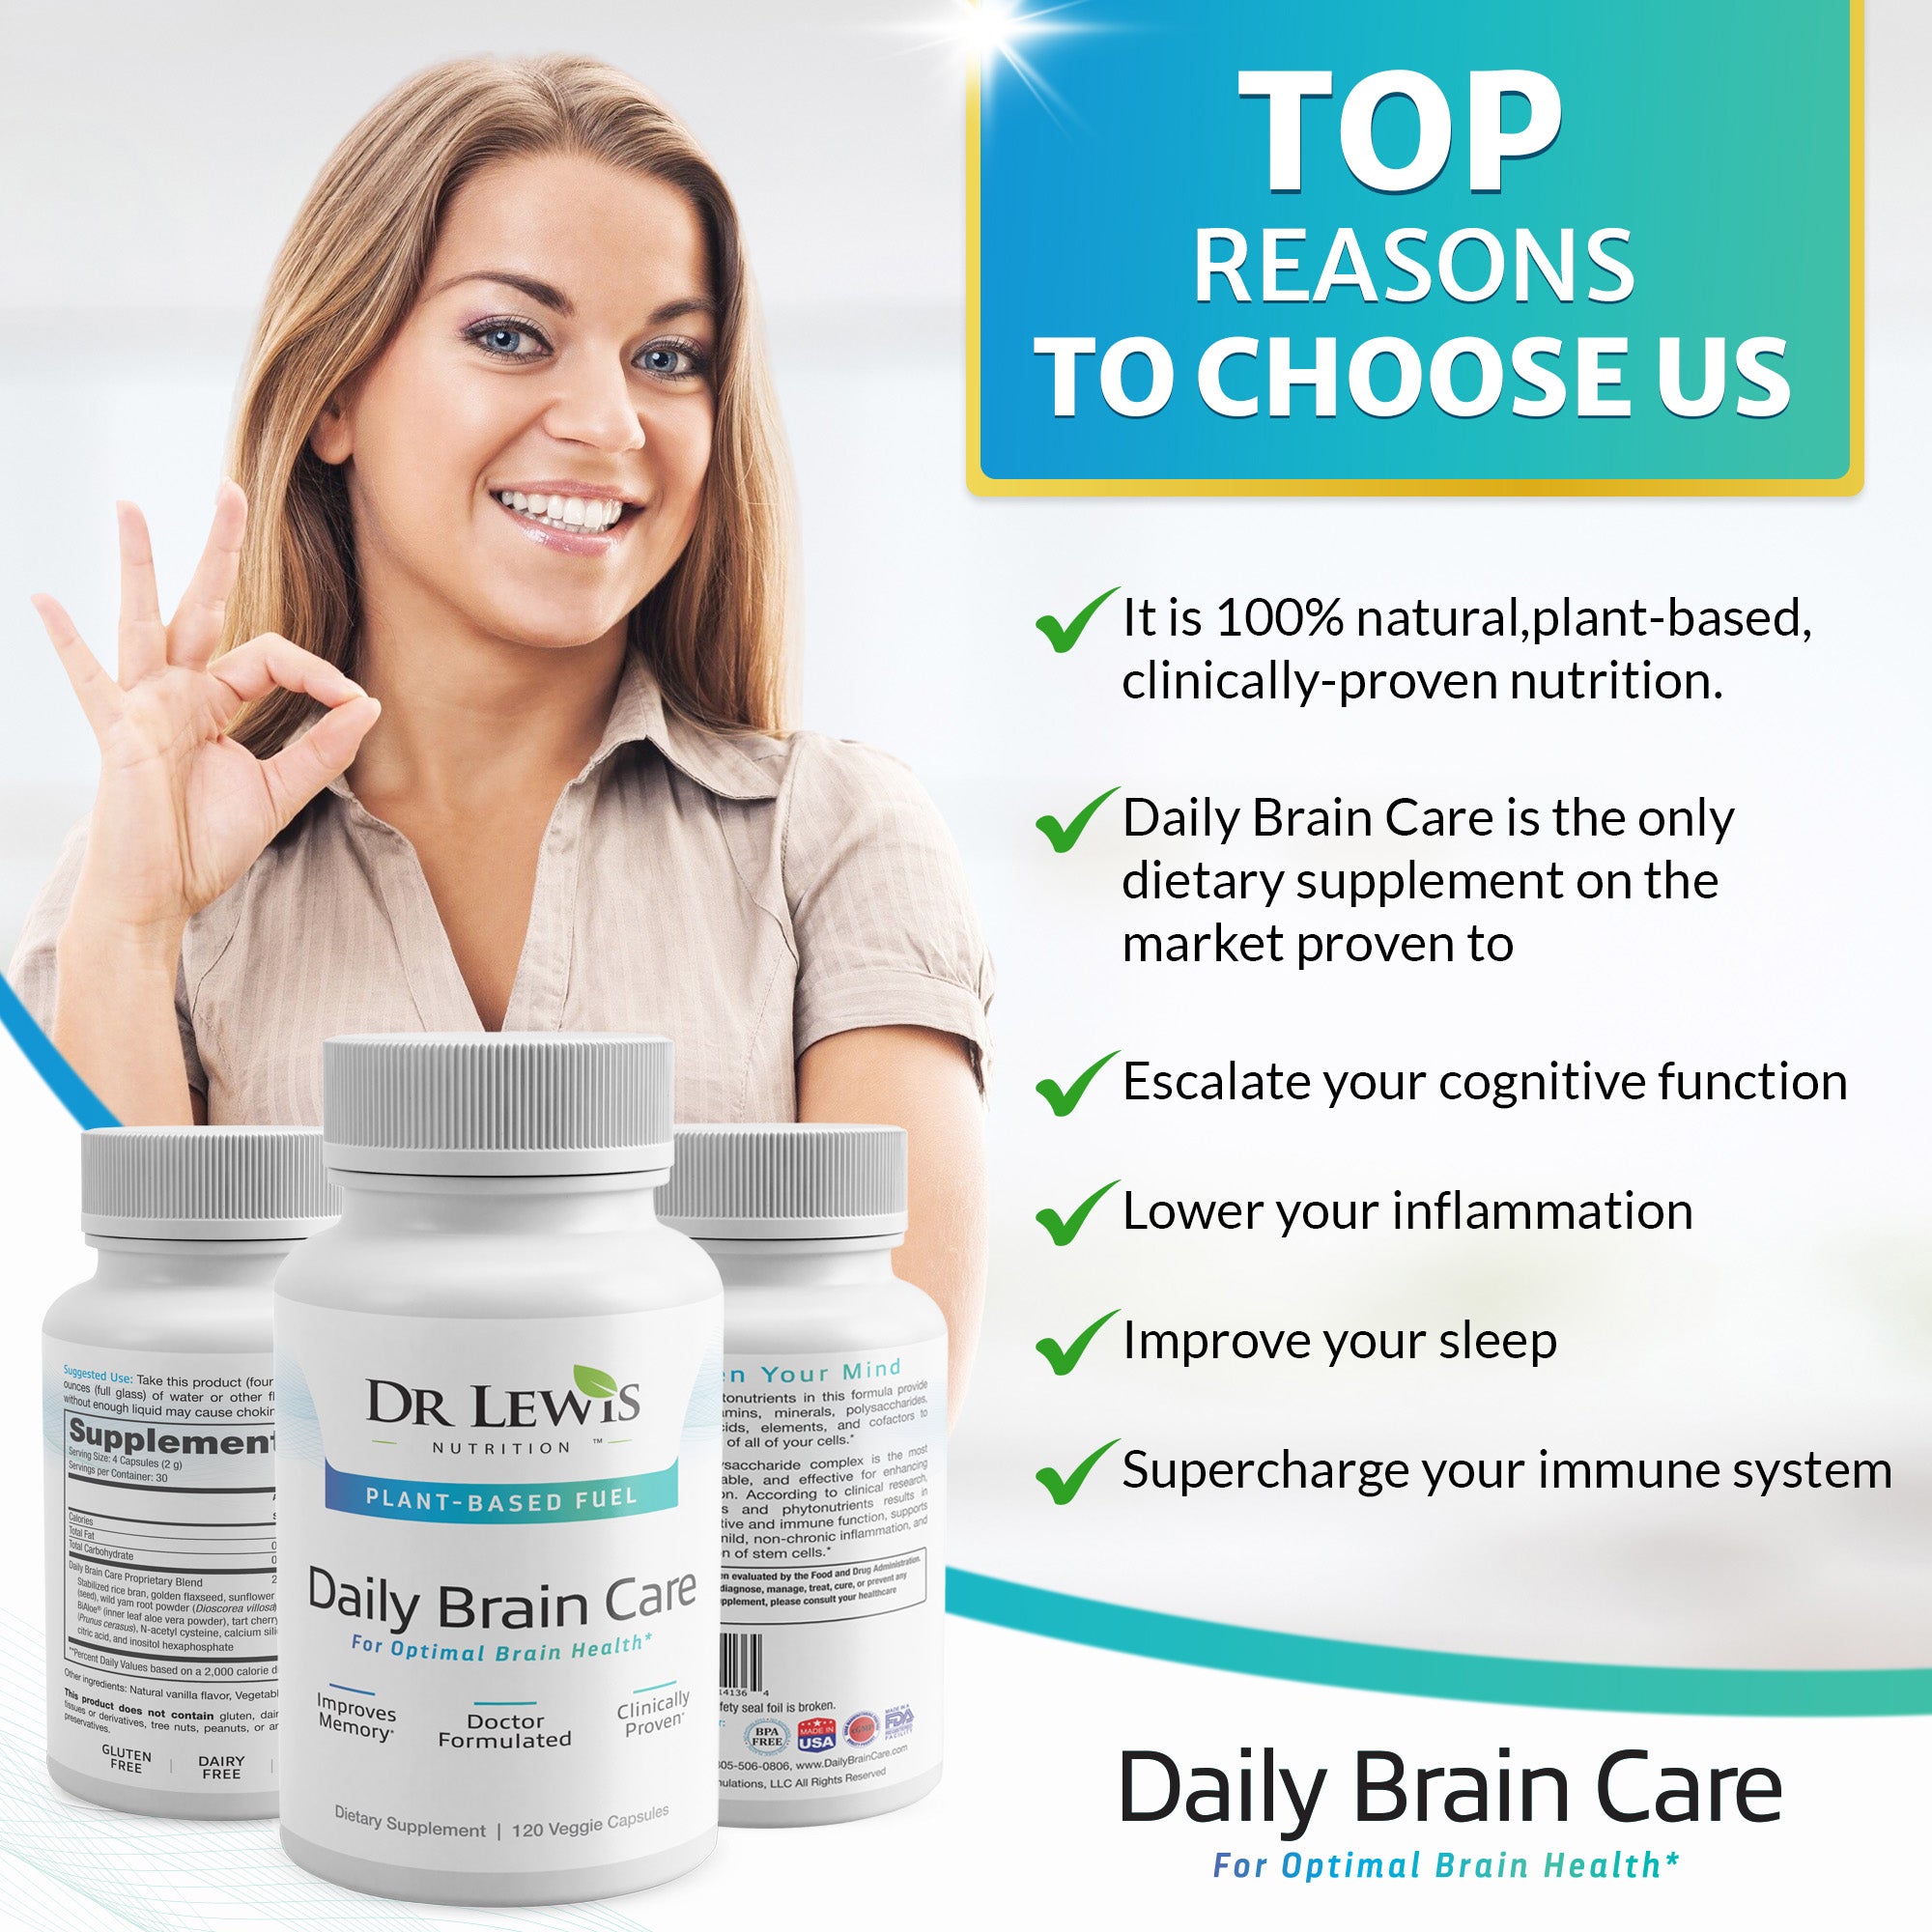 Daily Brain Care Capsules